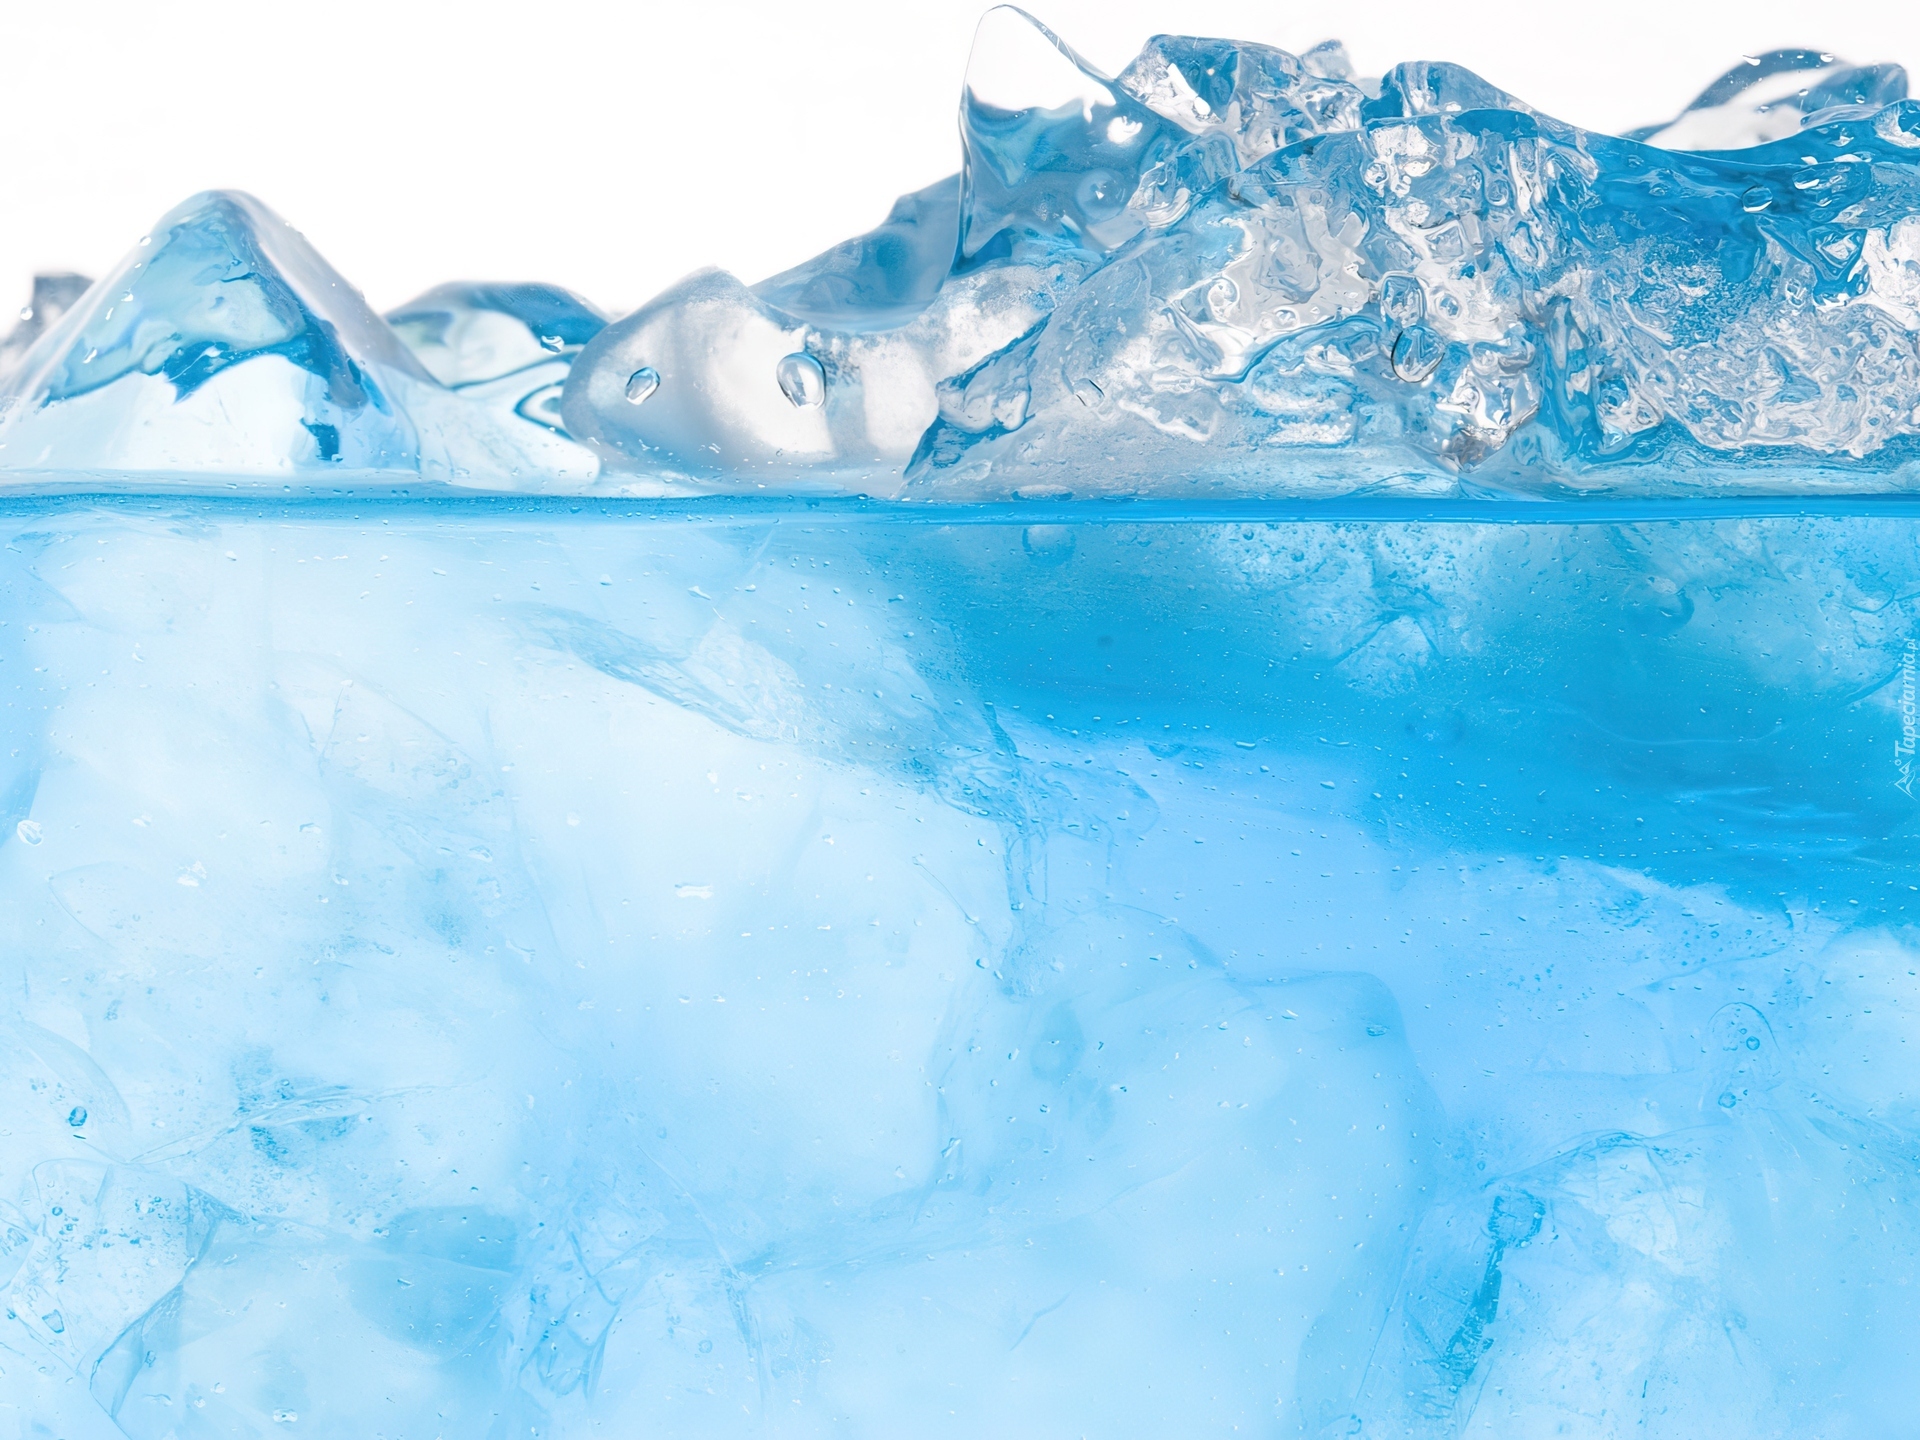 Айс ice. Лед фон. Ледяной фон. Текстура льда. Голубой лед.